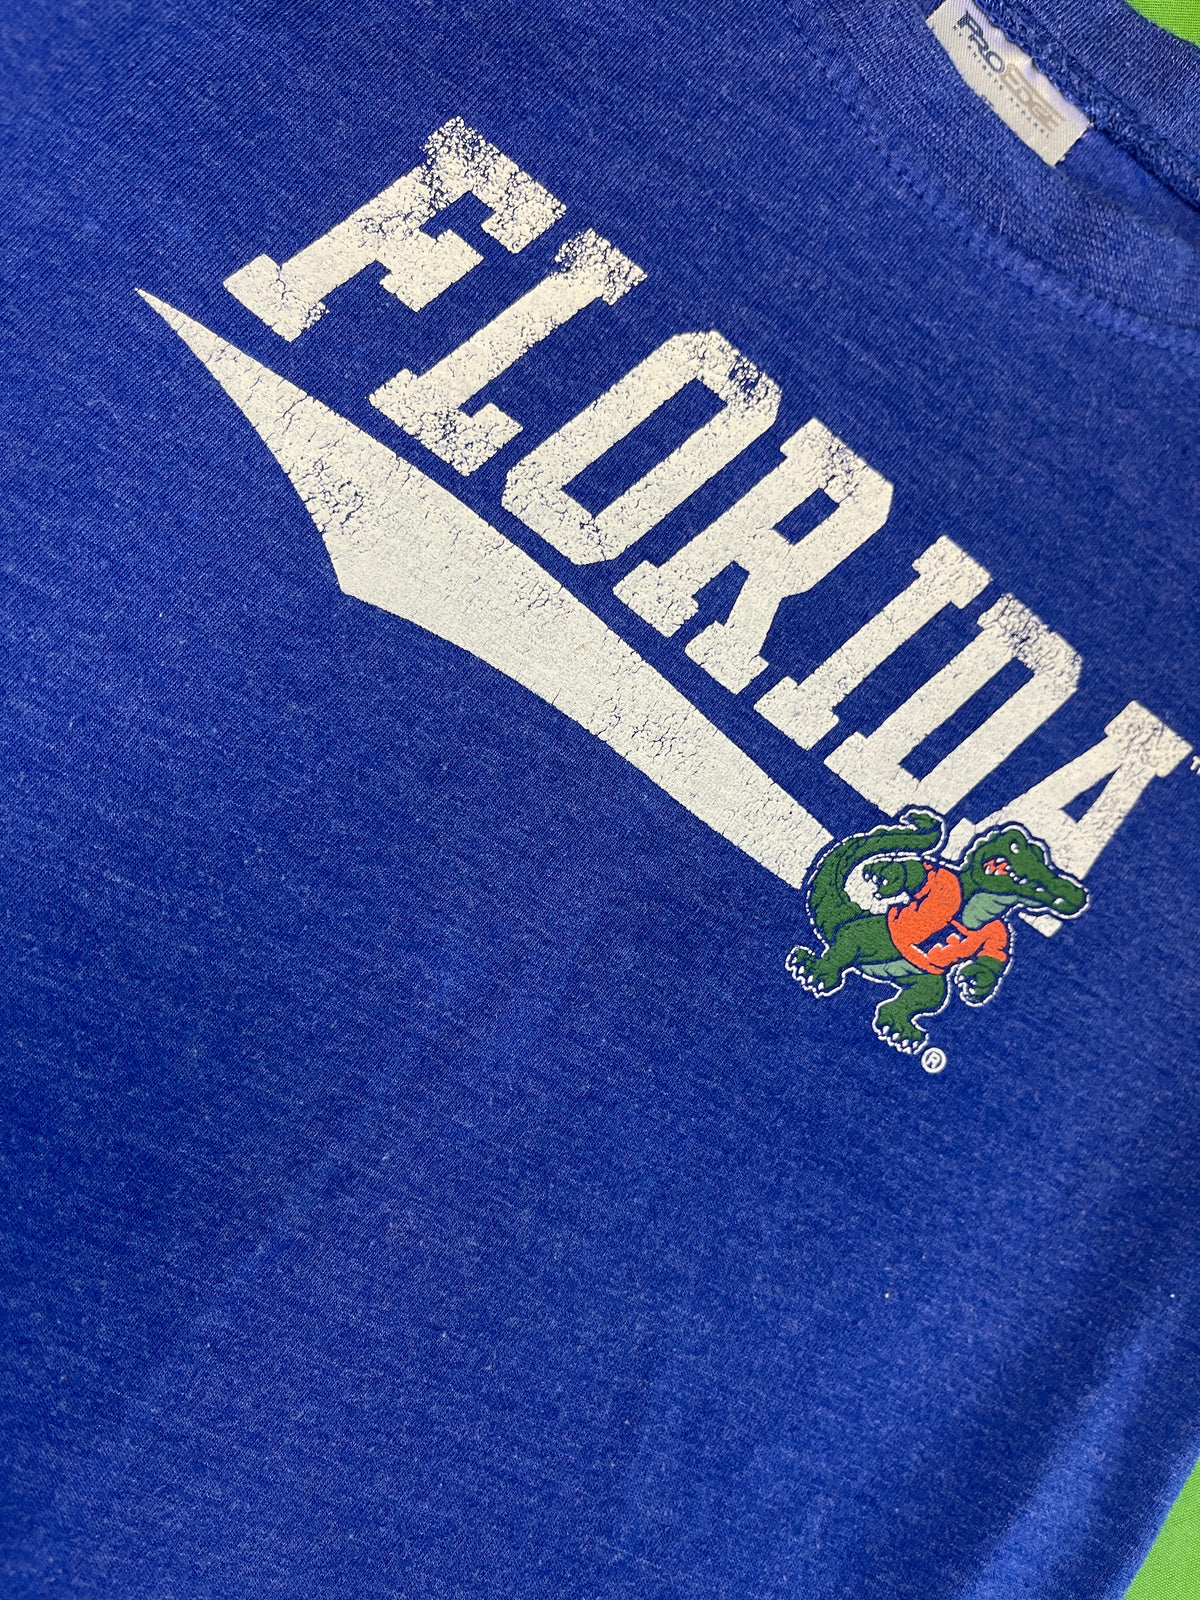 NCAA Florida Gators Blue T-Shirt Toddler 2T